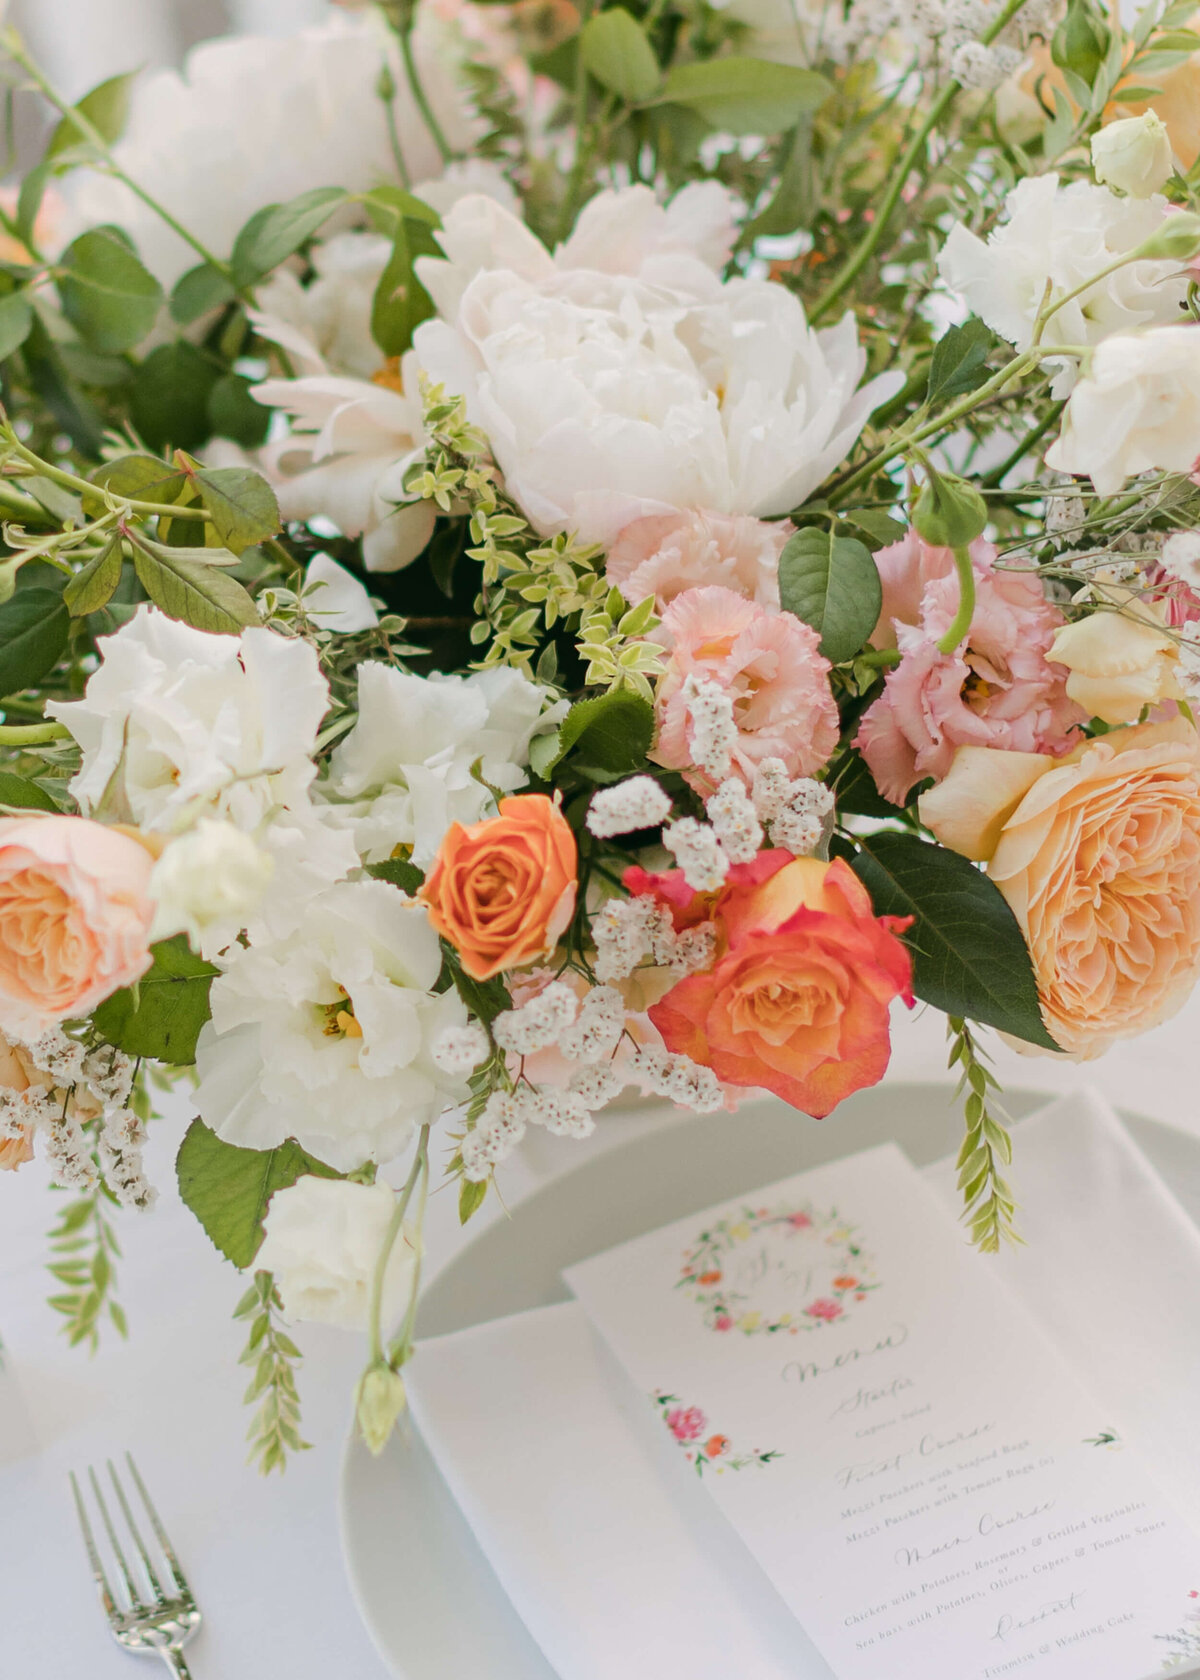 chloe-winstanley-italian-wedding-positano-rada-resturant-flowers